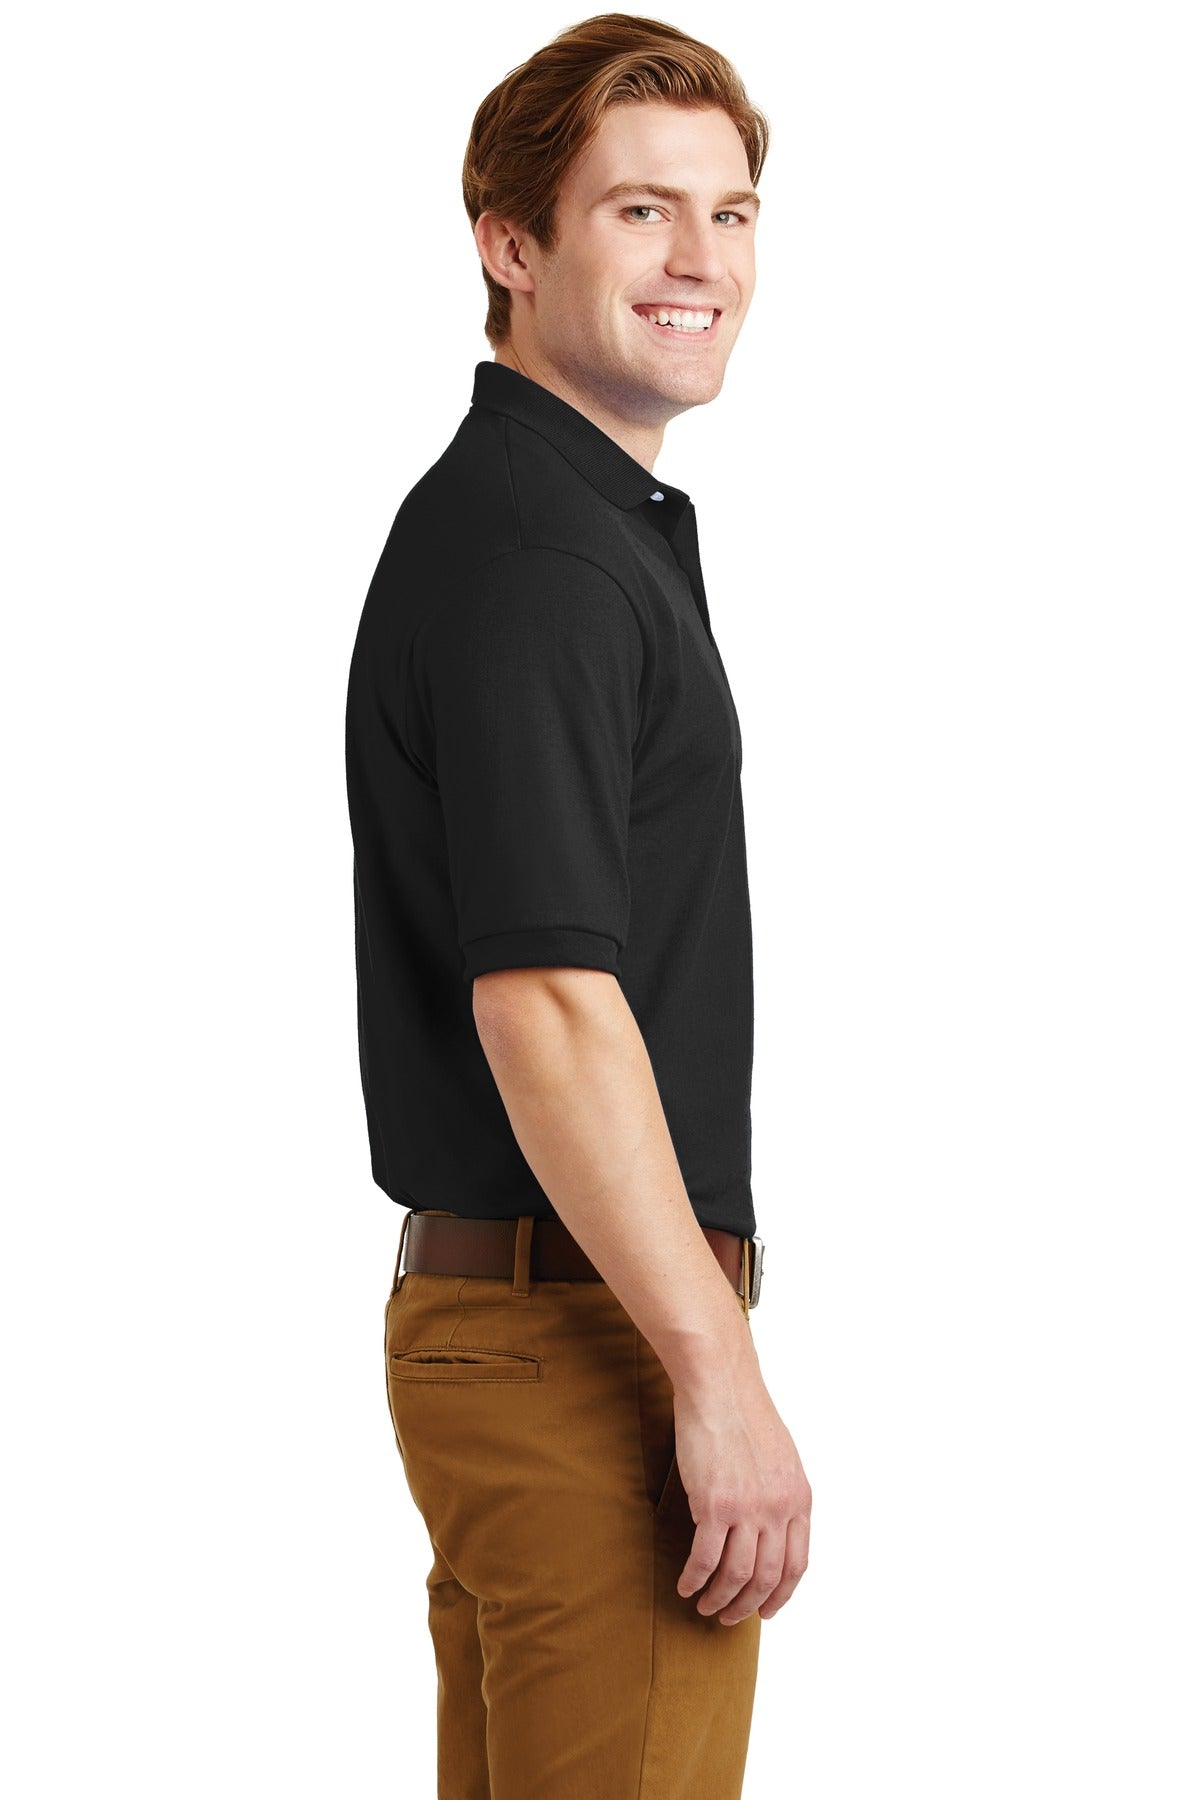 JERZEES® - SpotShield™ 5.4-Ounce Jersey Knit Sport Shirt. 437M [Black] - DFW Impression